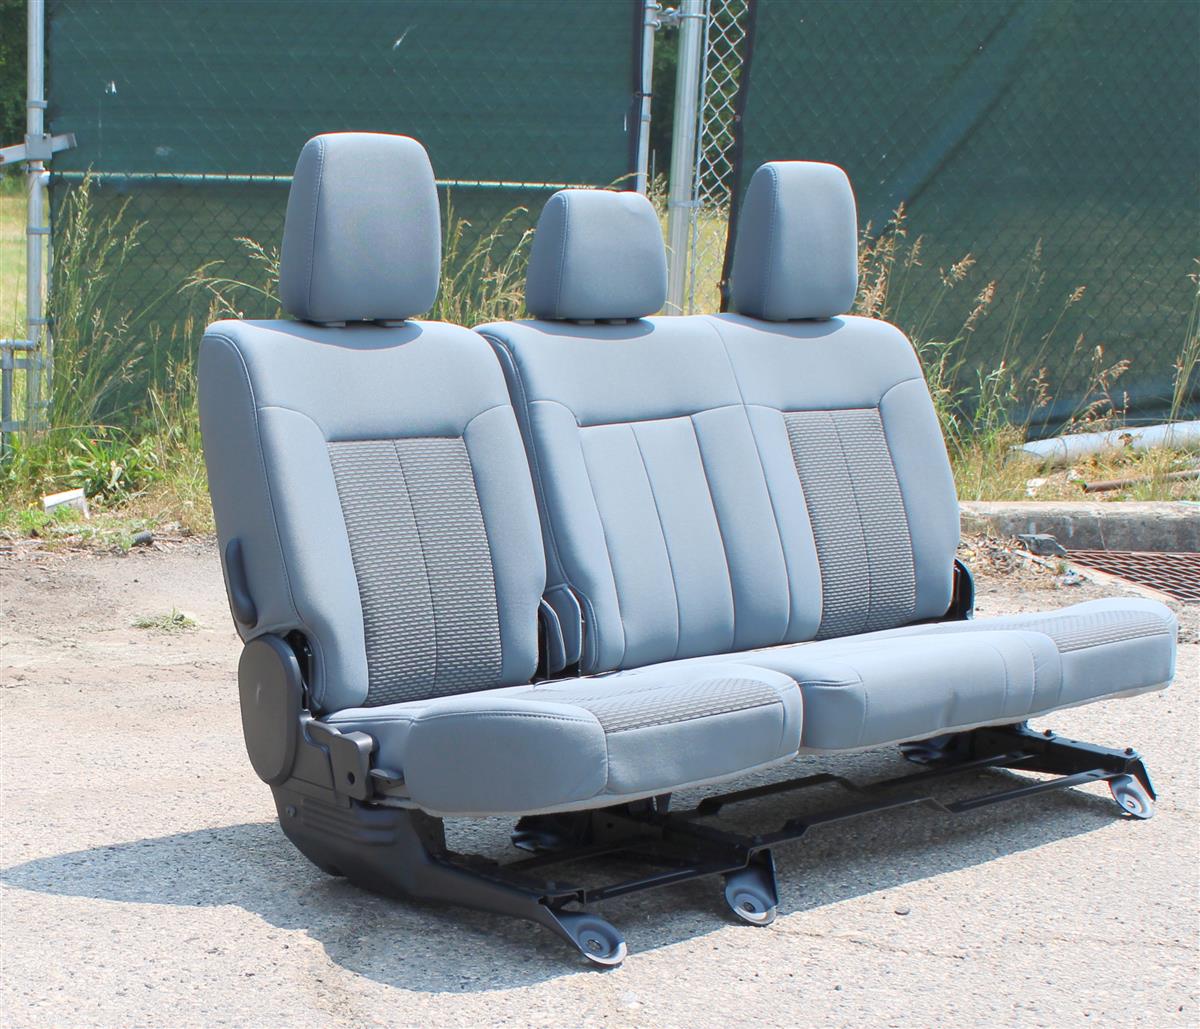 SP-2994 | _SP-2994 6040 Split Fold Down Vehicle Bench Seats  (19).JPG